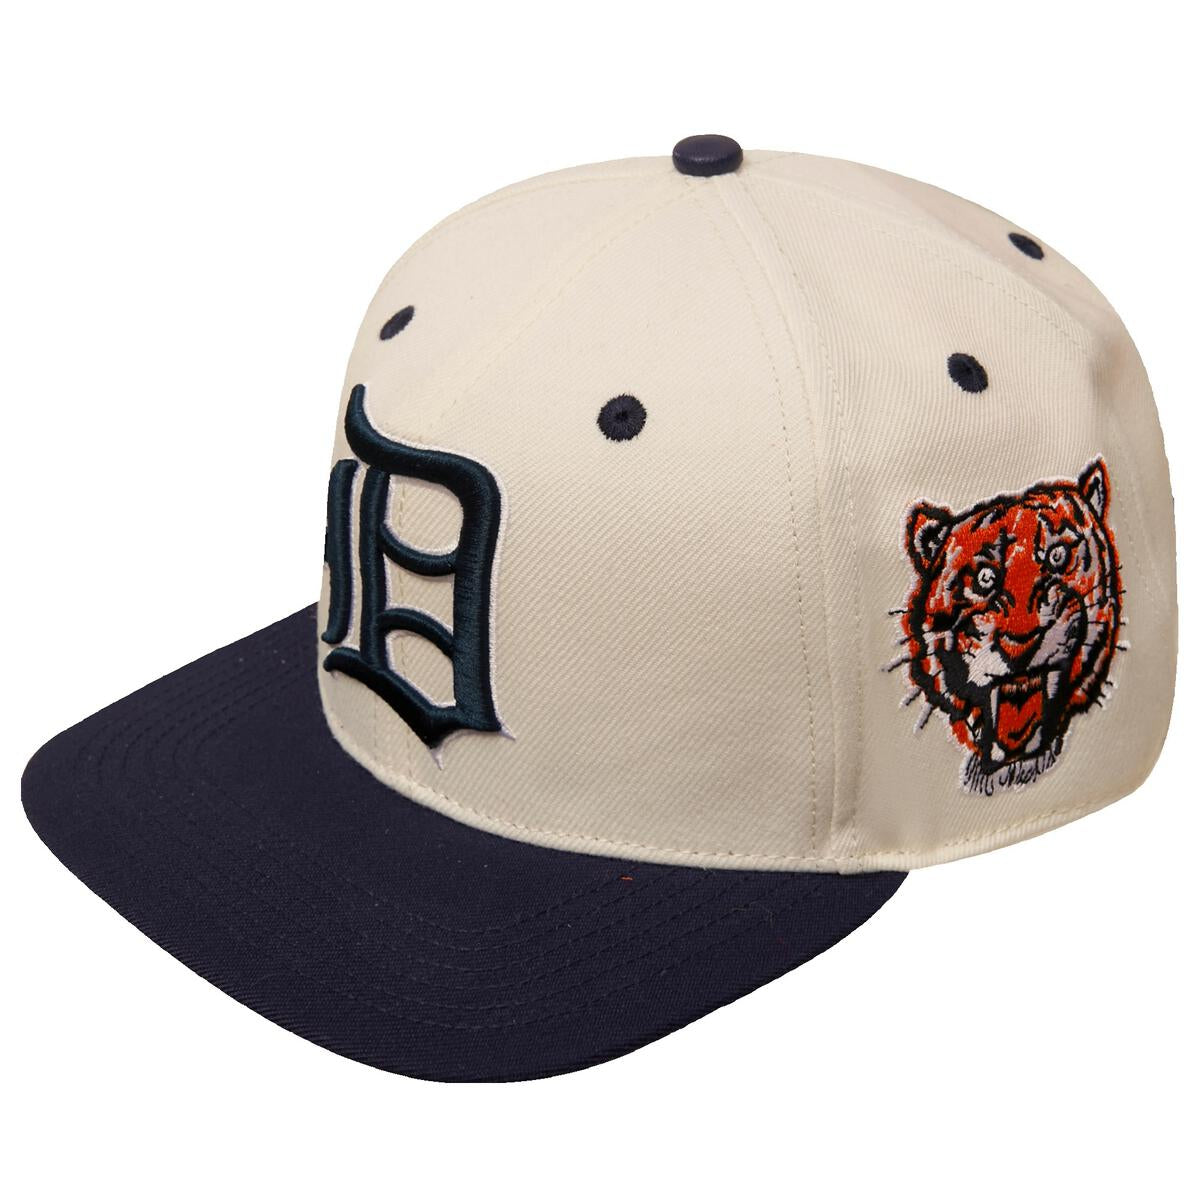 Detroit Tigers Hat Vintage Tigers Hat Vintage Detroit 